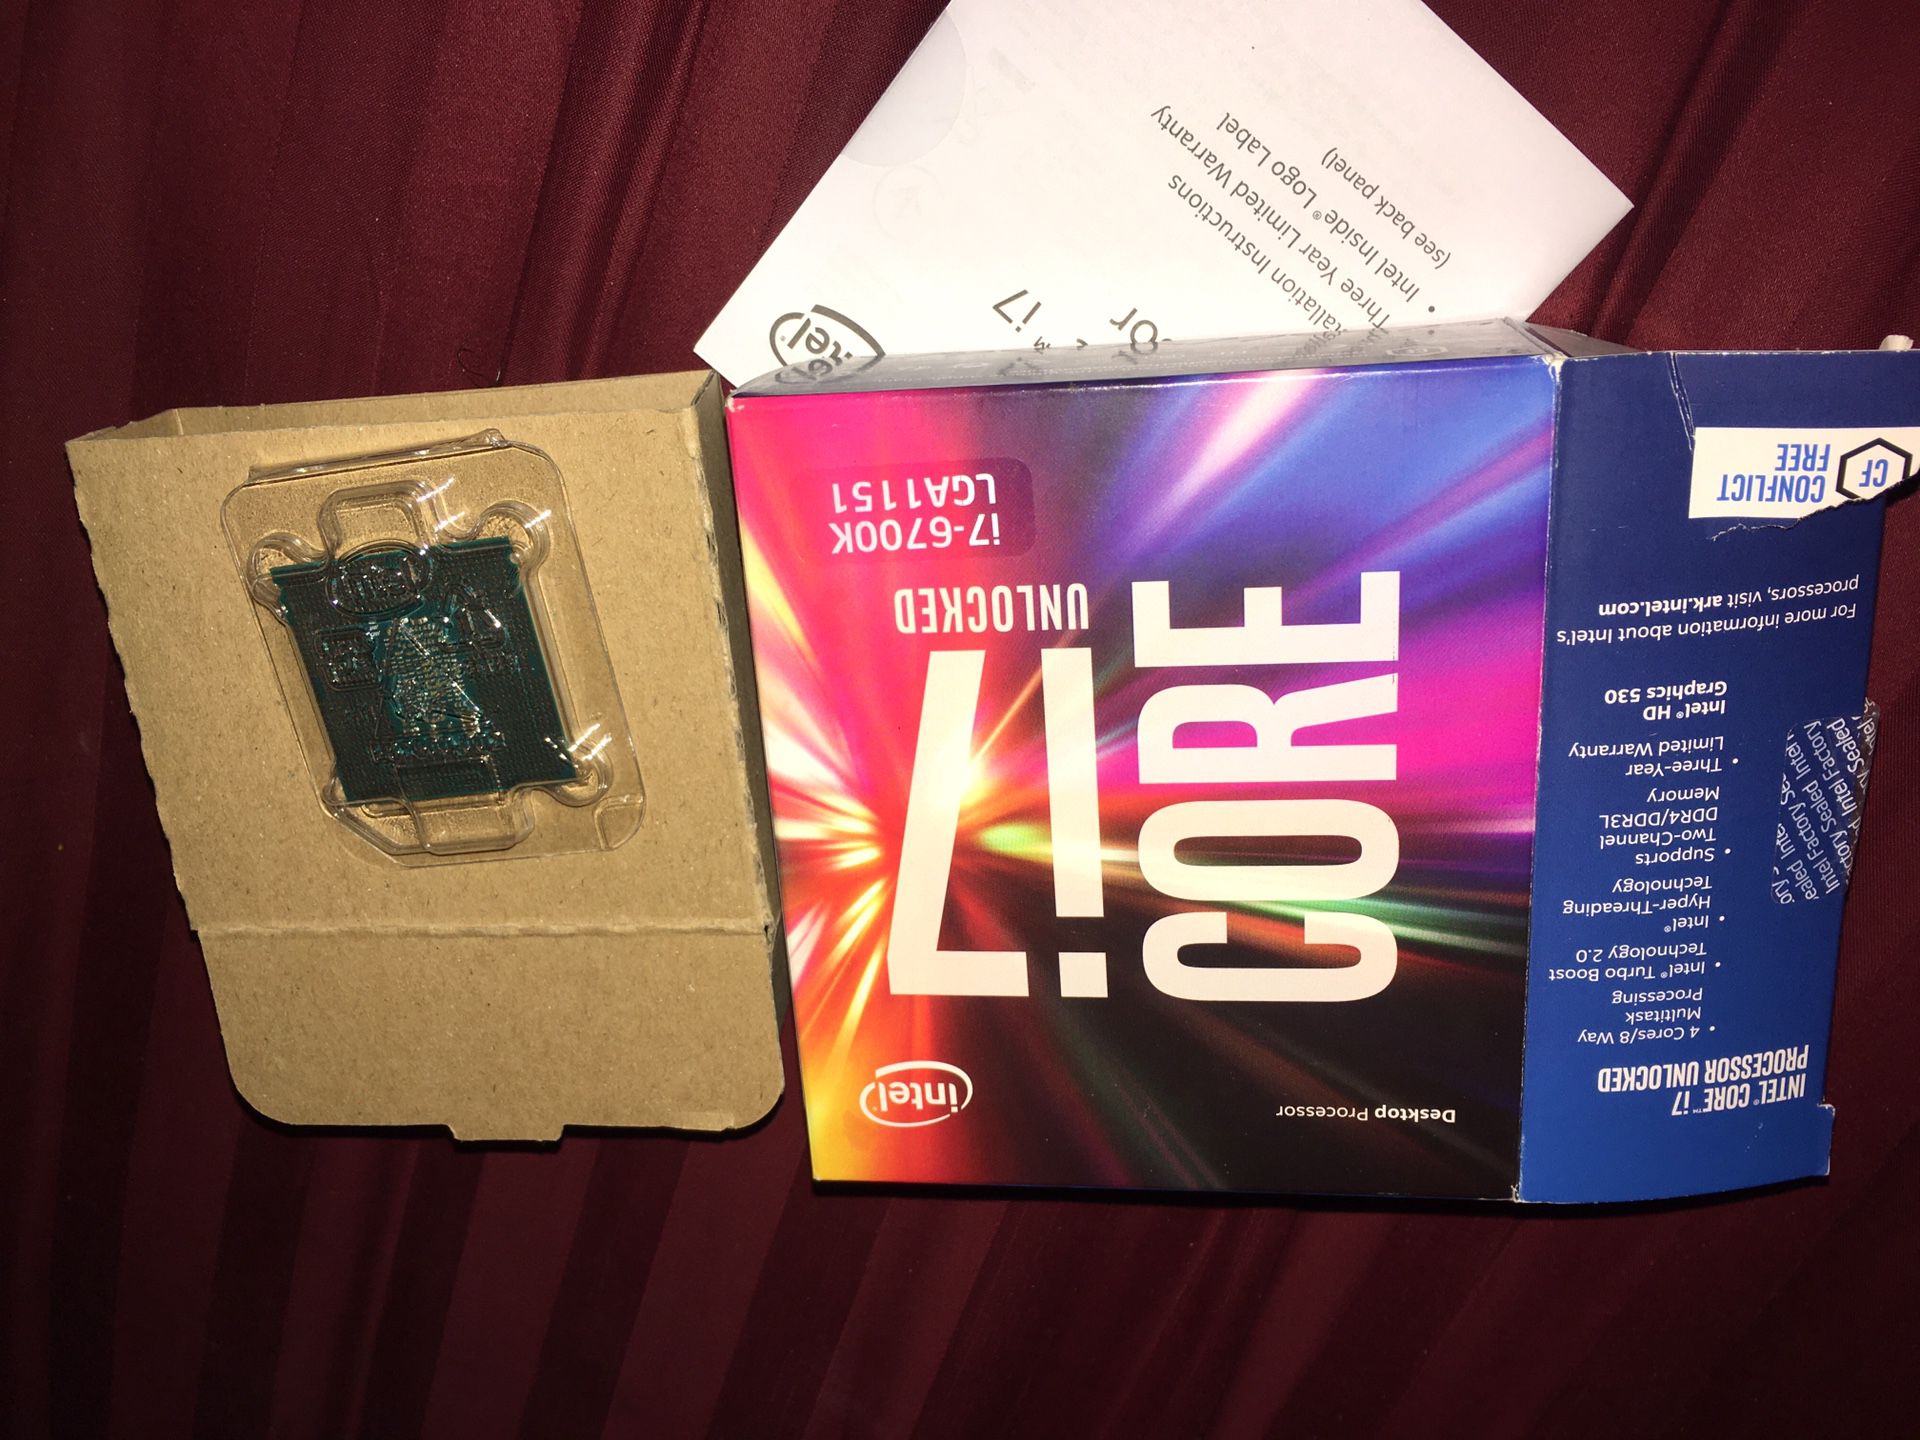 Intel core i7-6700k 4.0 GHz Quad-Core Processor